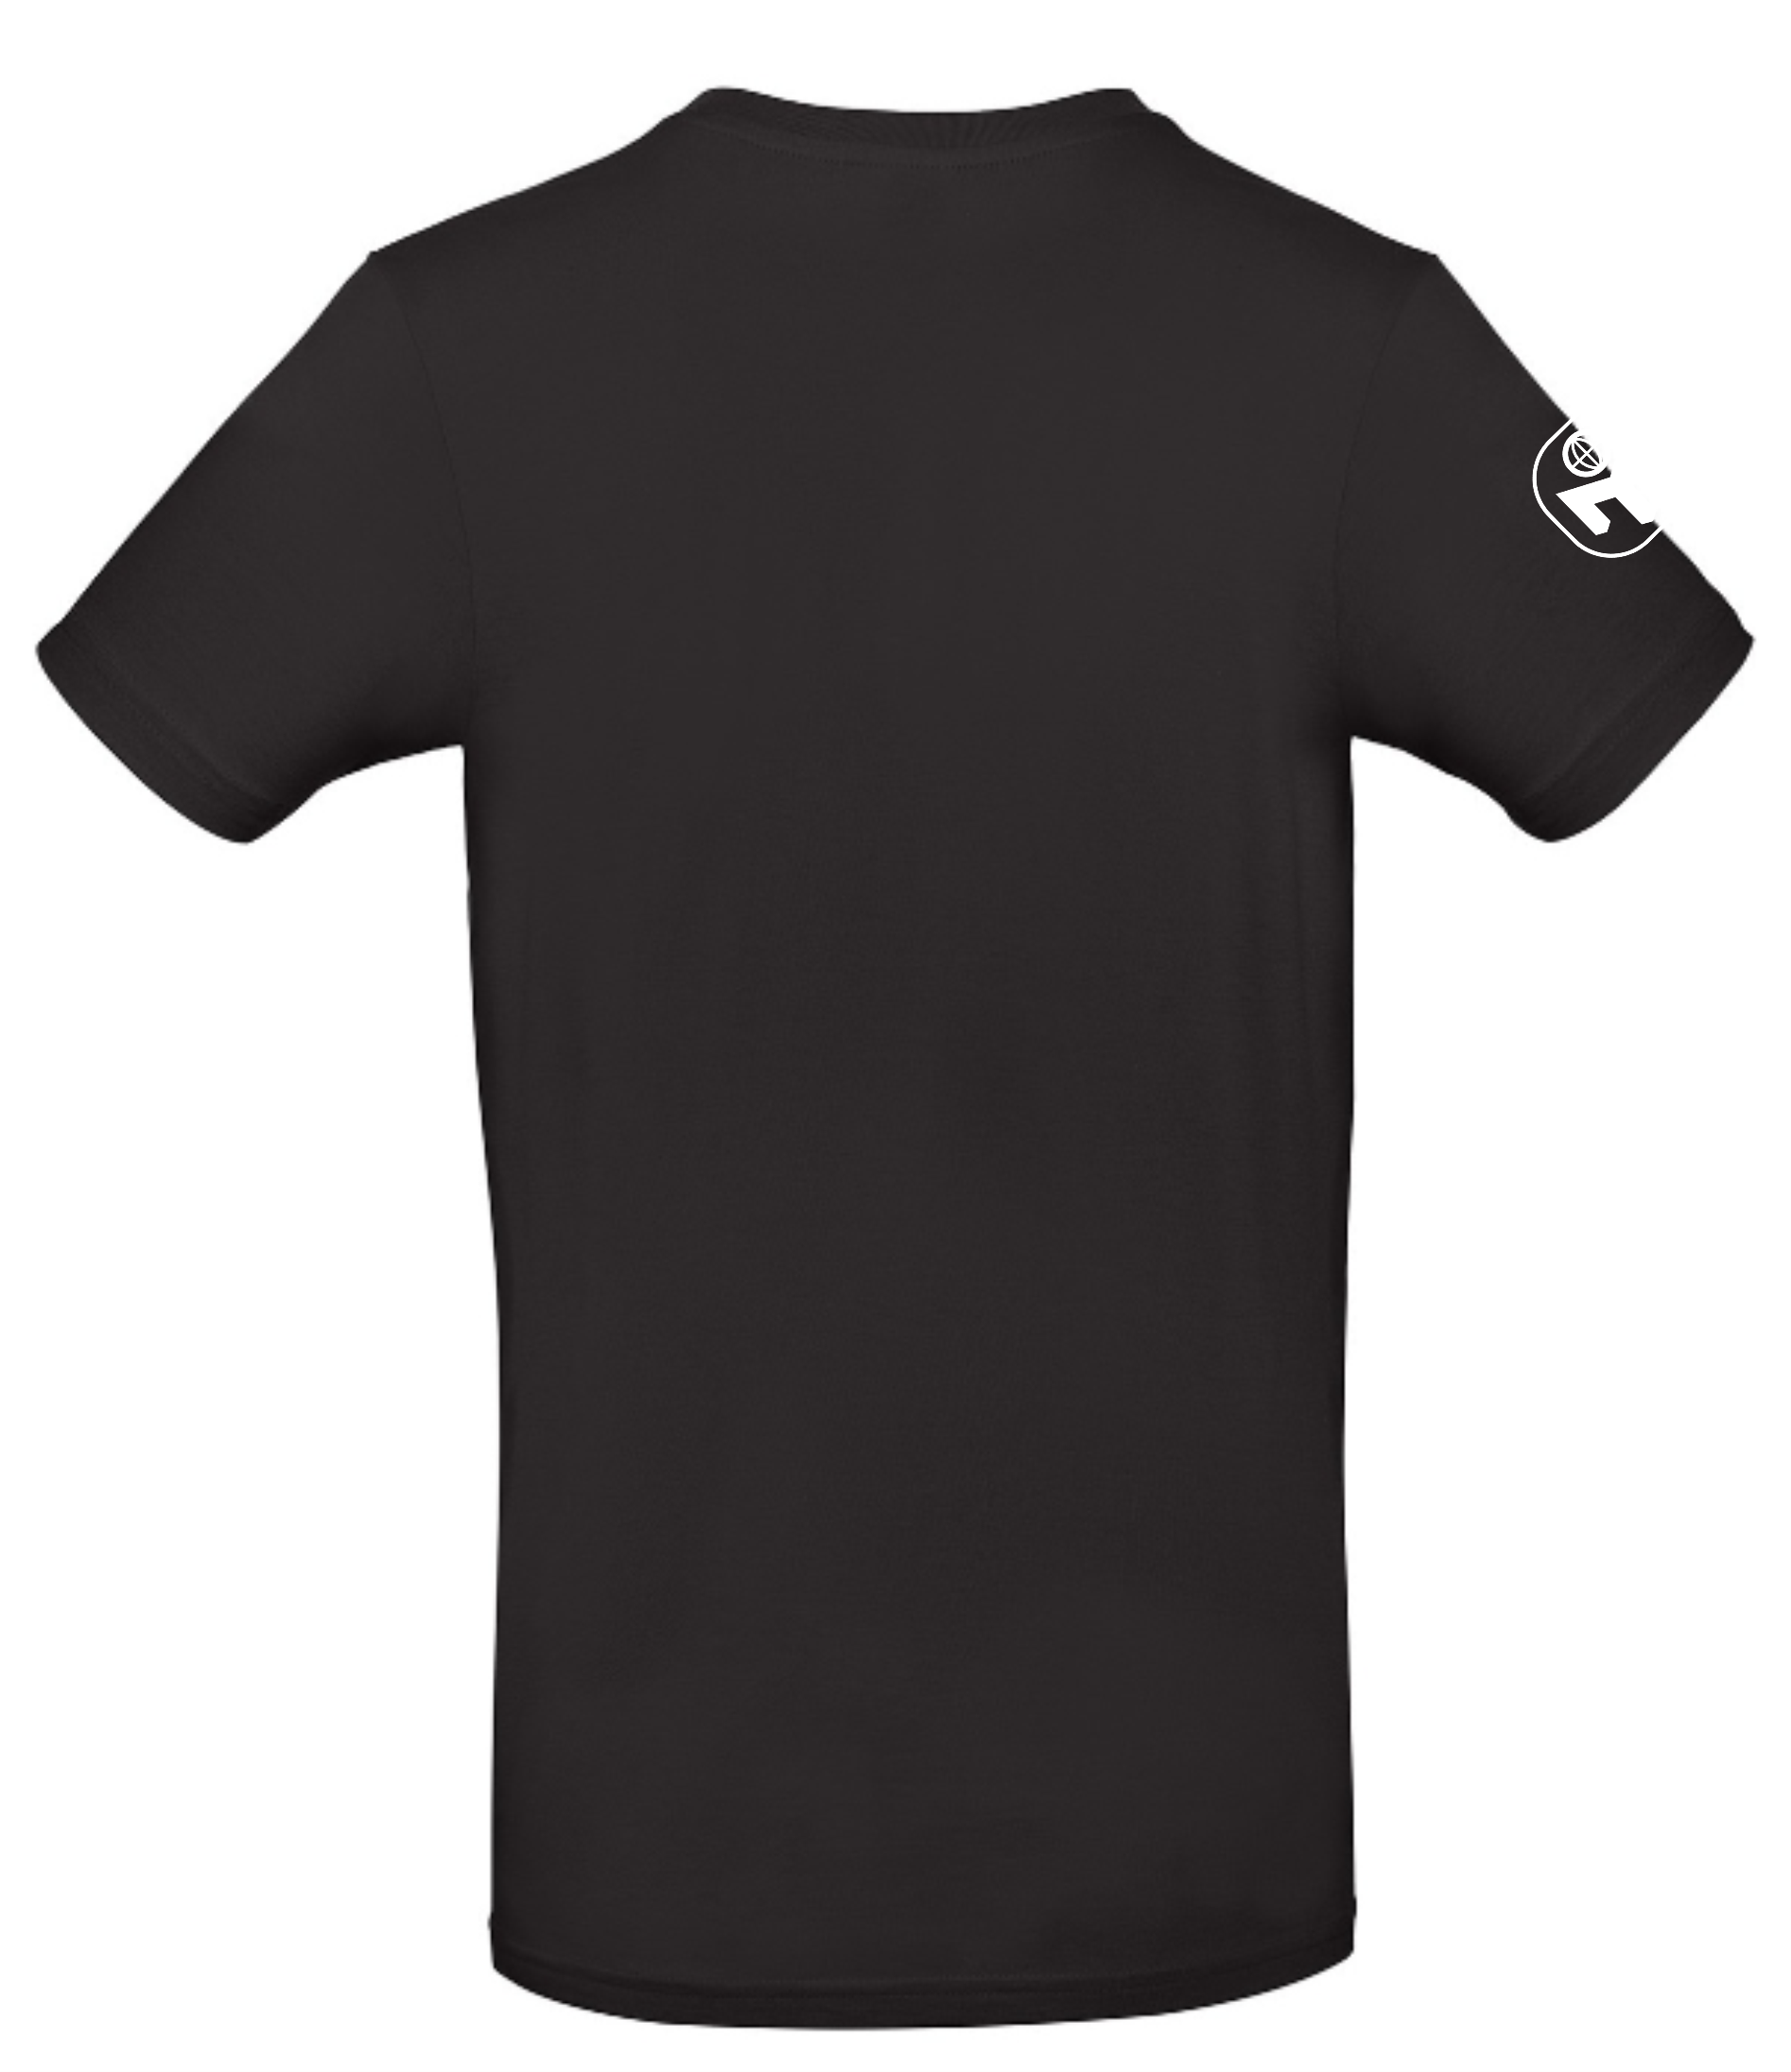 T-Shirt Herren "Nerdschutz" Standard